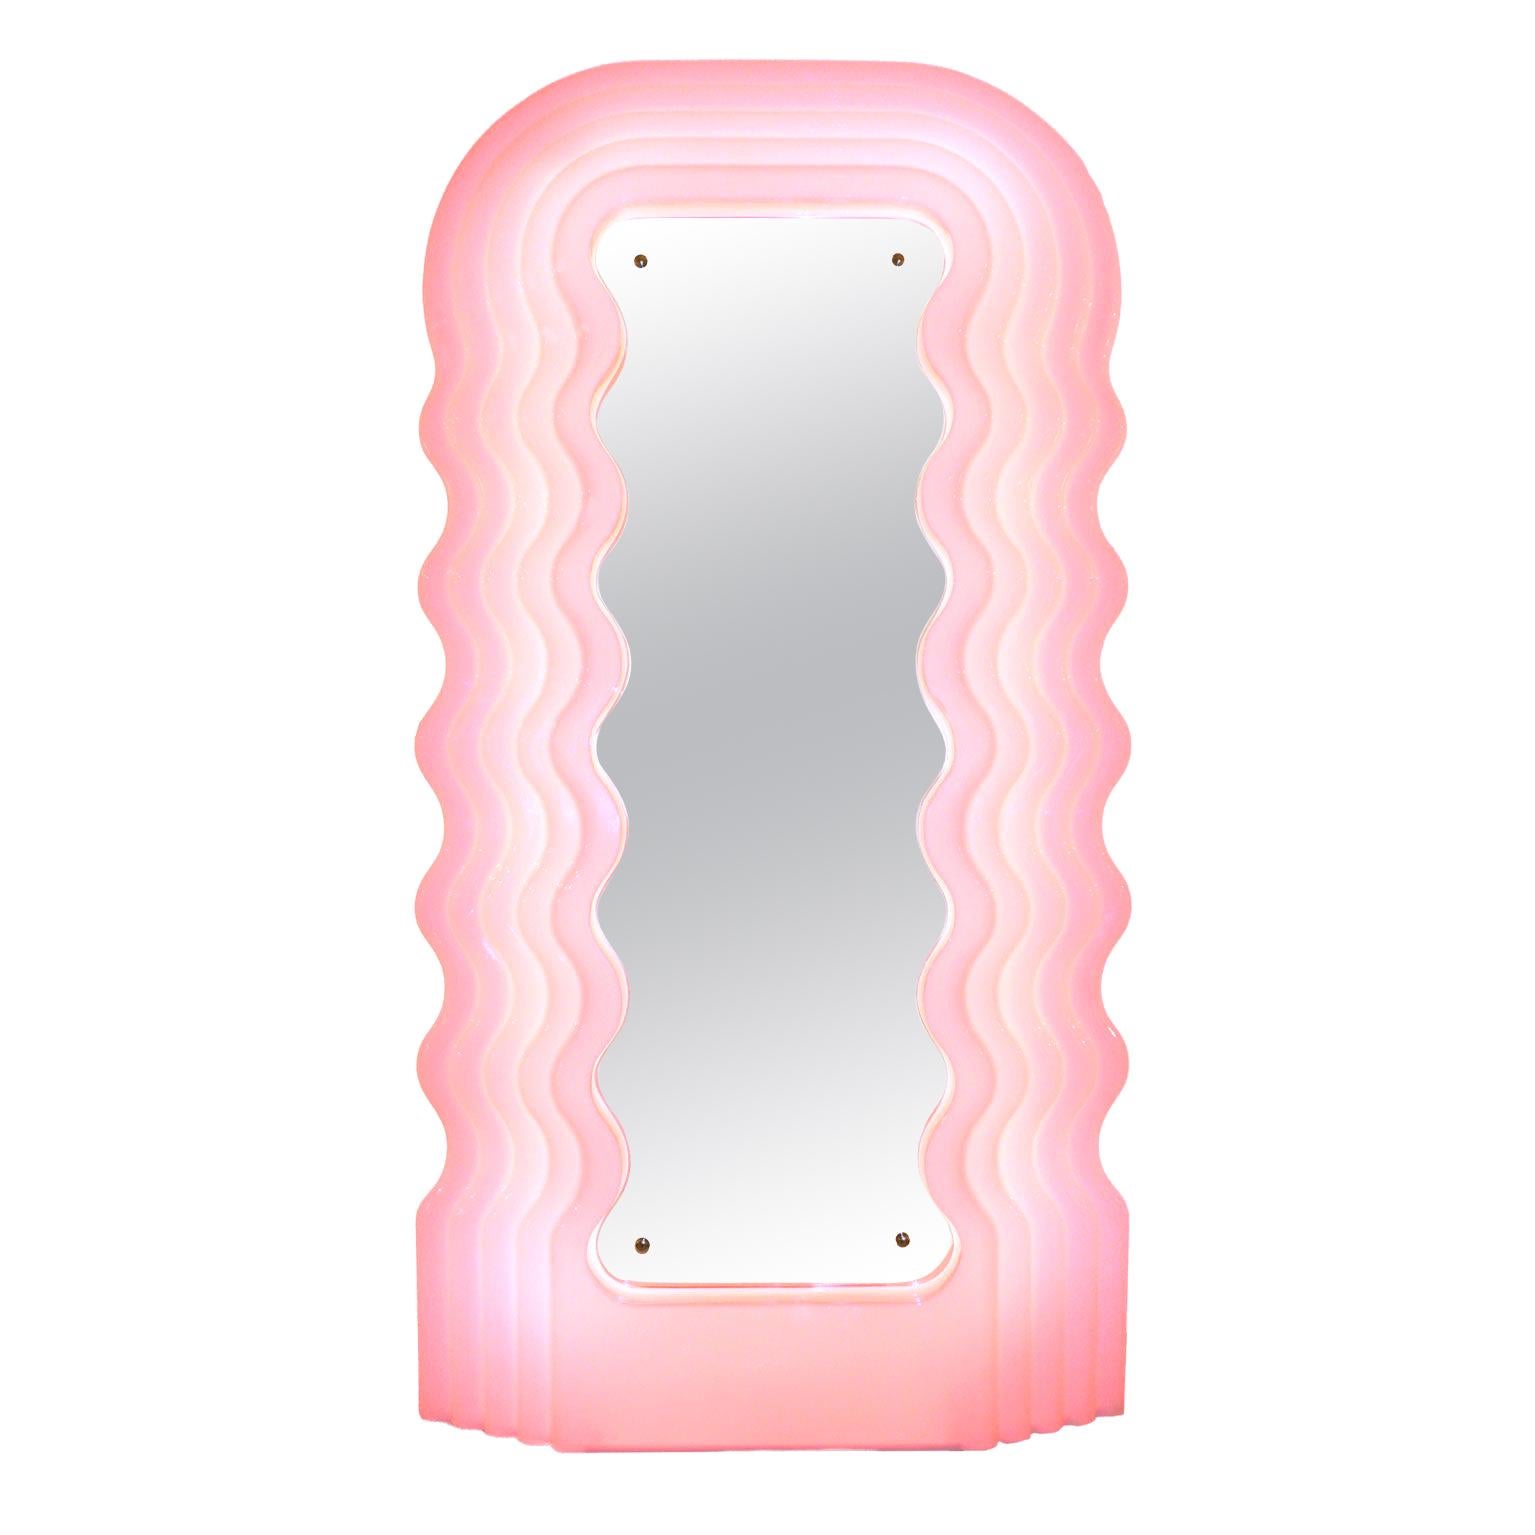 Ettore Sottsass Perplex and Pink Neon Lamp "Ultrafragola" Italian Mirror